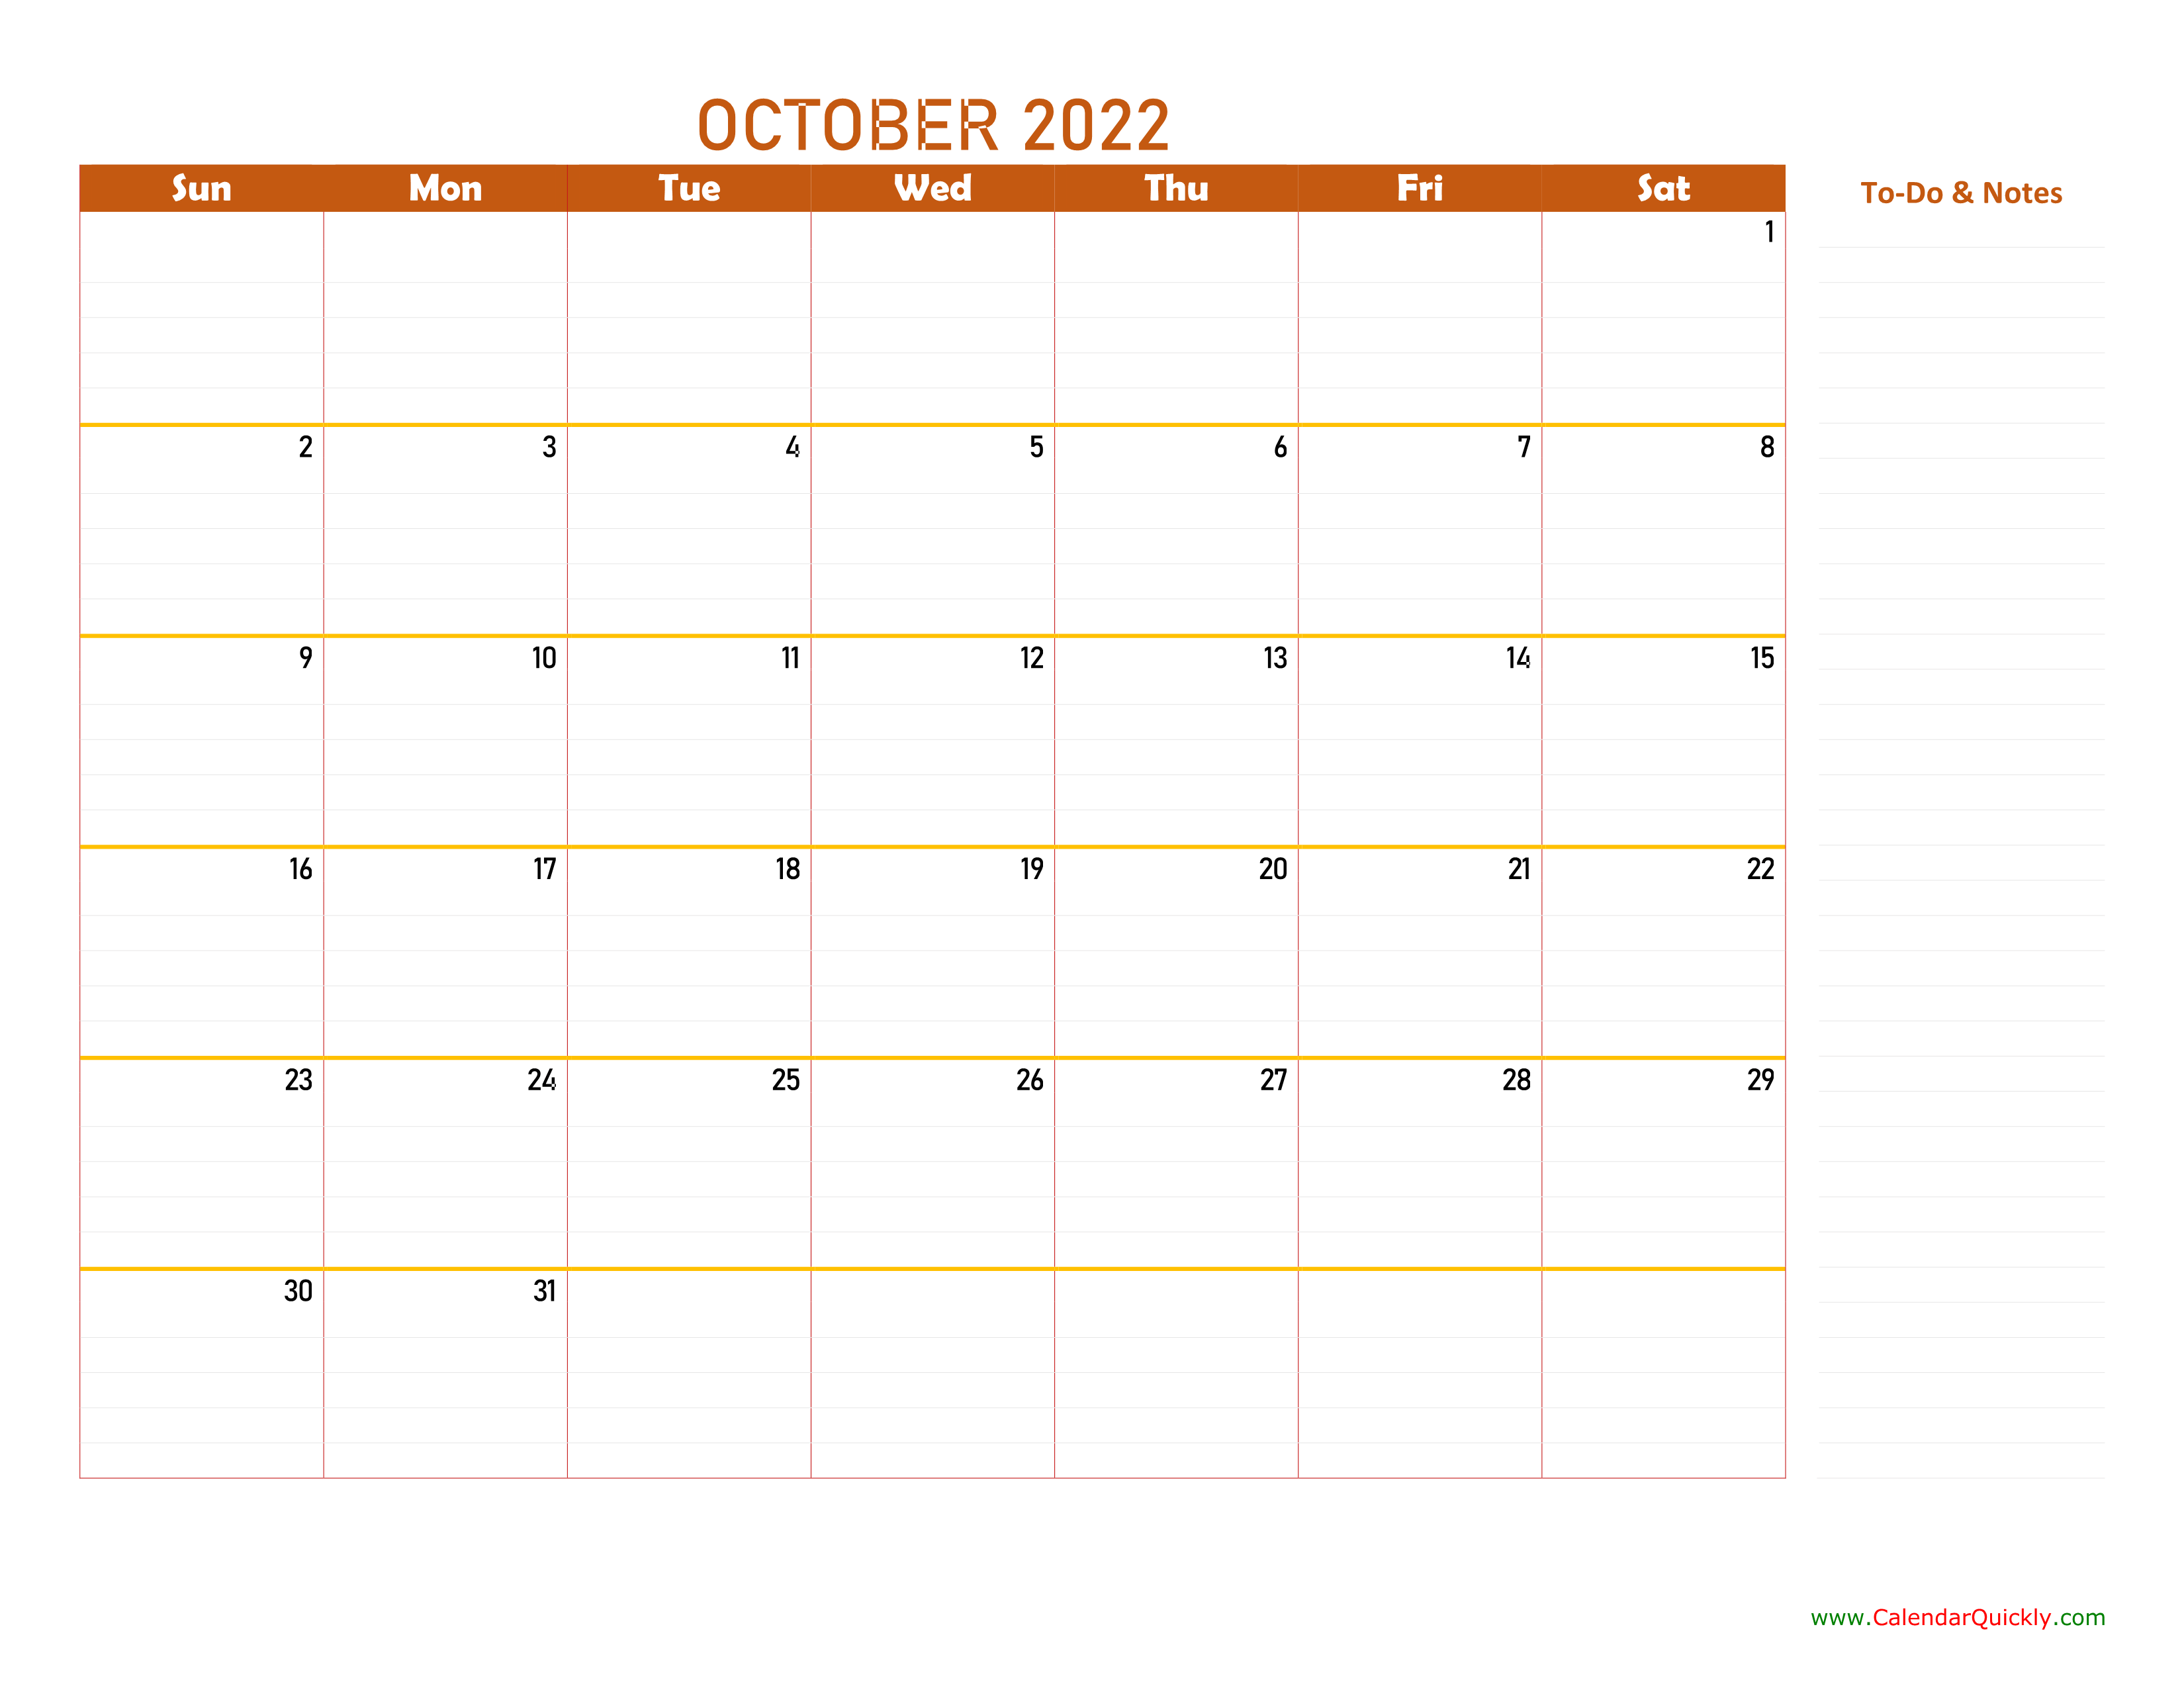 October 2022 Calendar Calendar Quickly